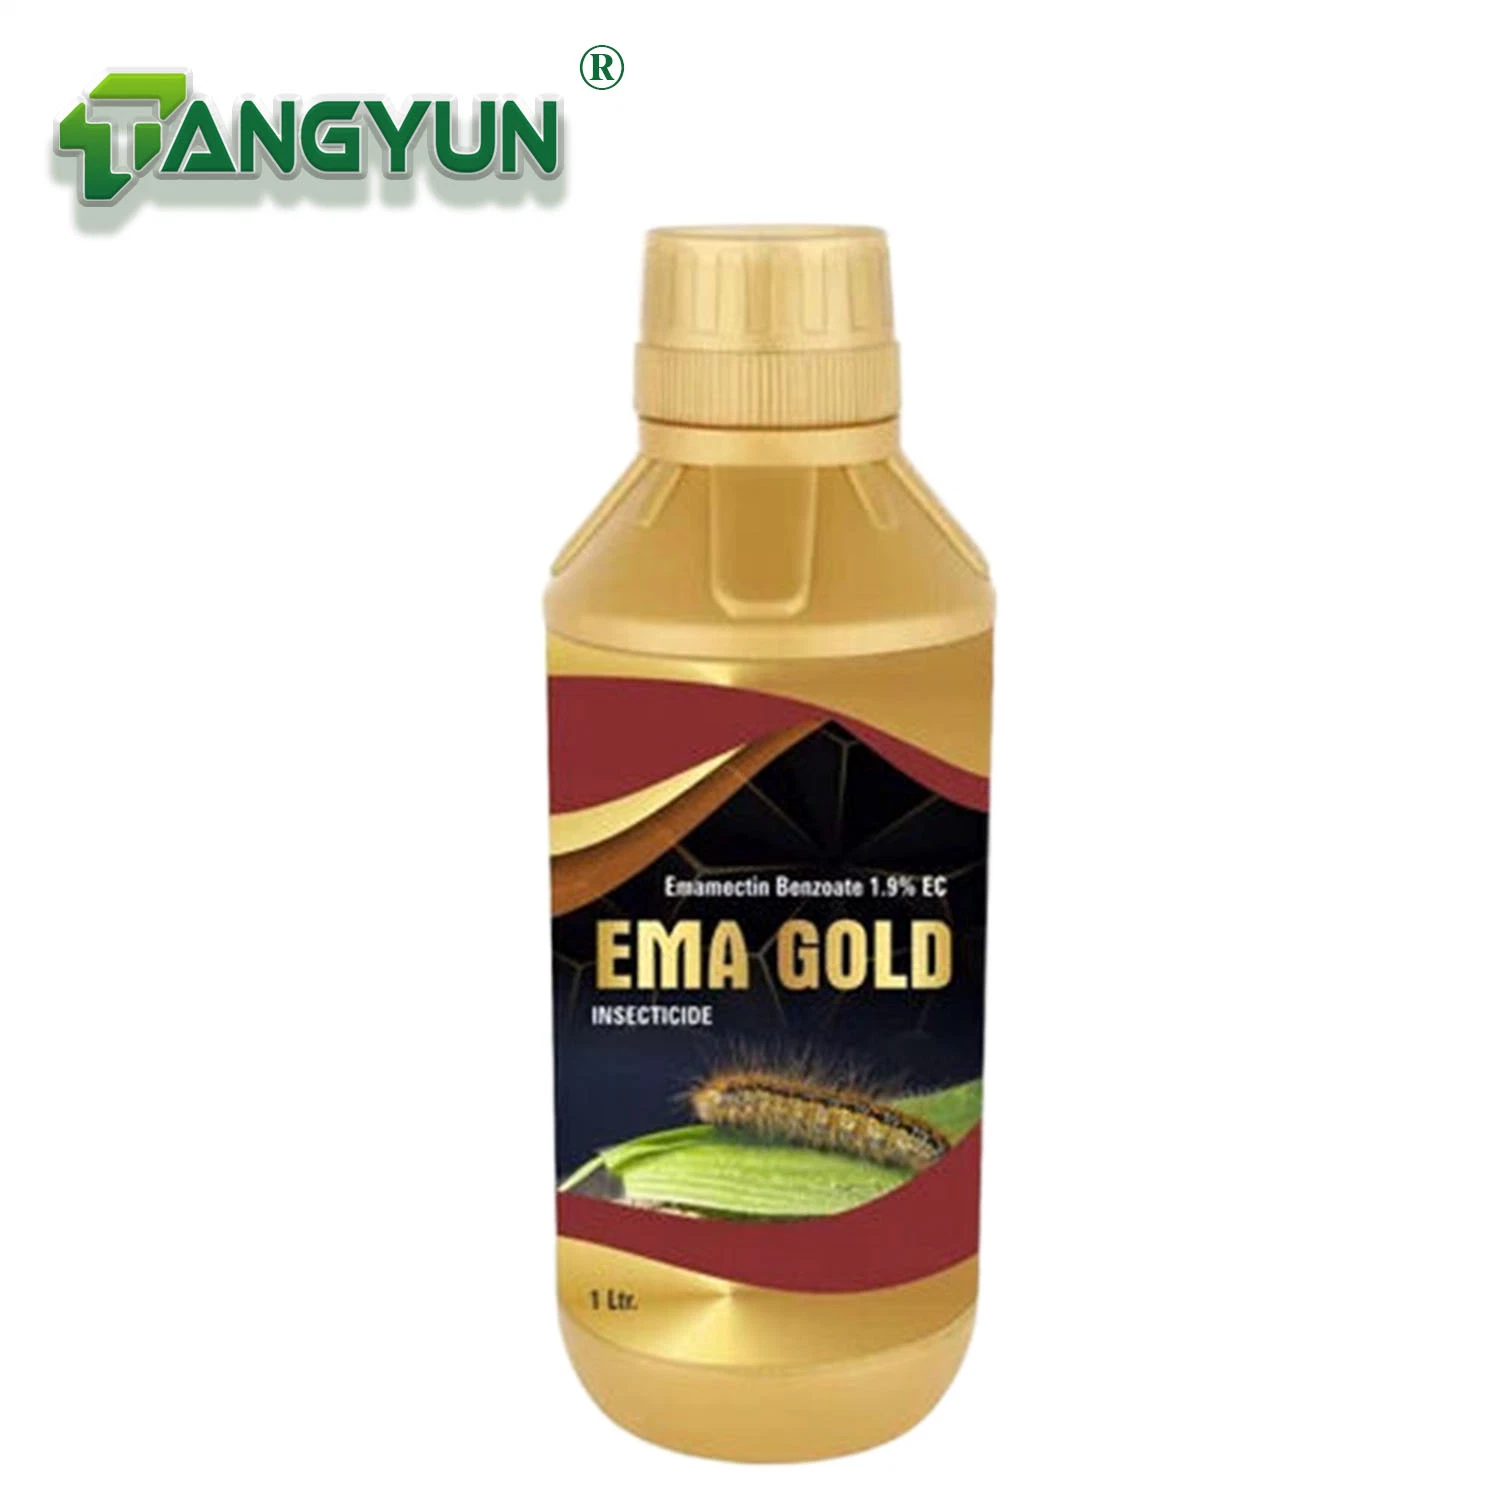 Benzoato Emamectin 1,9%Ec excelente Emulsifiable líquido con gran eficacia